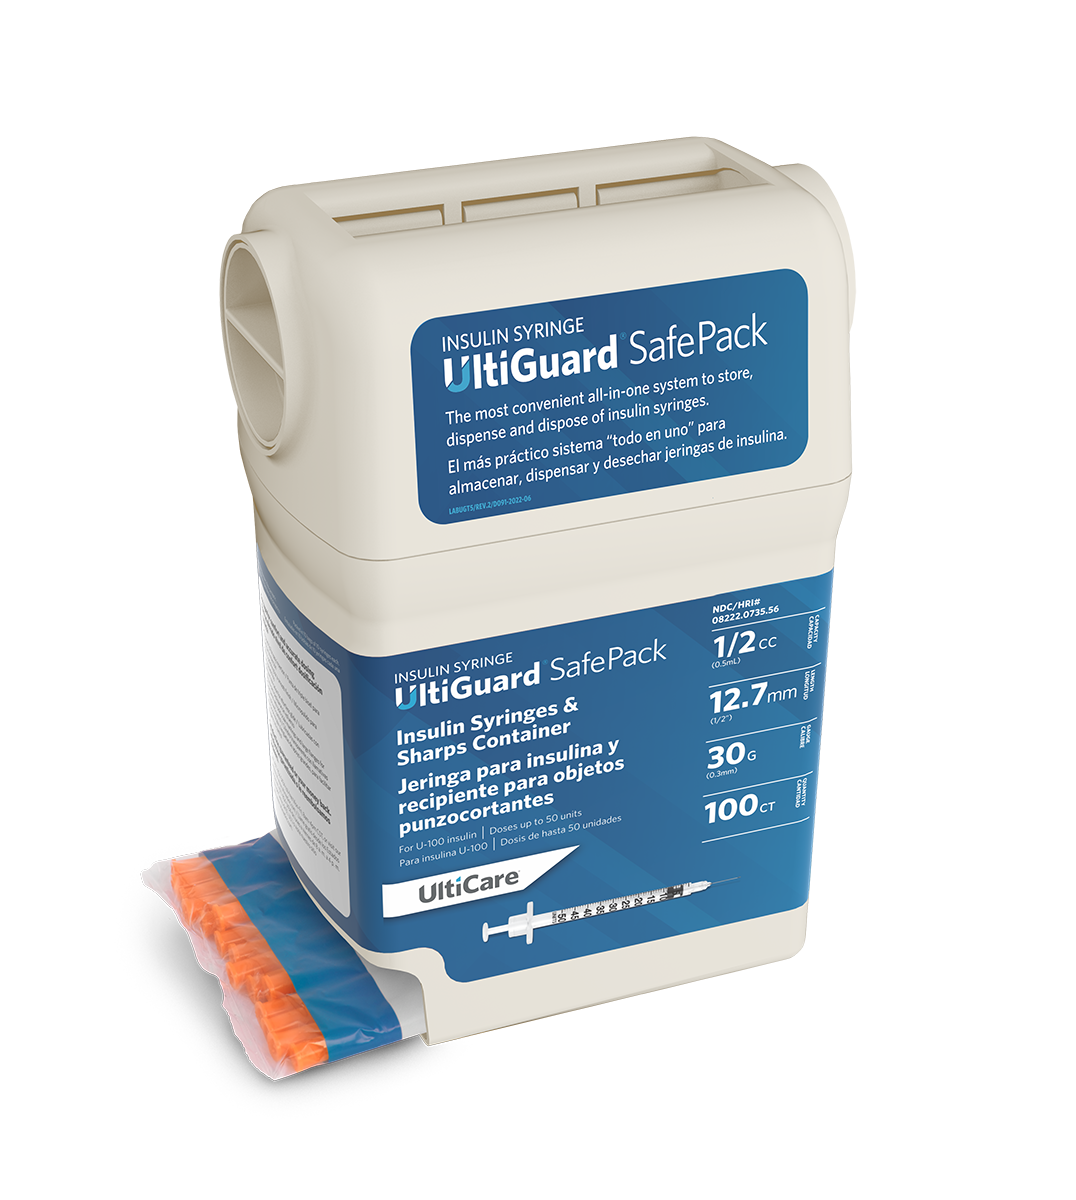 UltiGuard Safe Pack U-100 Insulin Syringes 1/2 mL/cc 12.7mm (1/2") x 30G